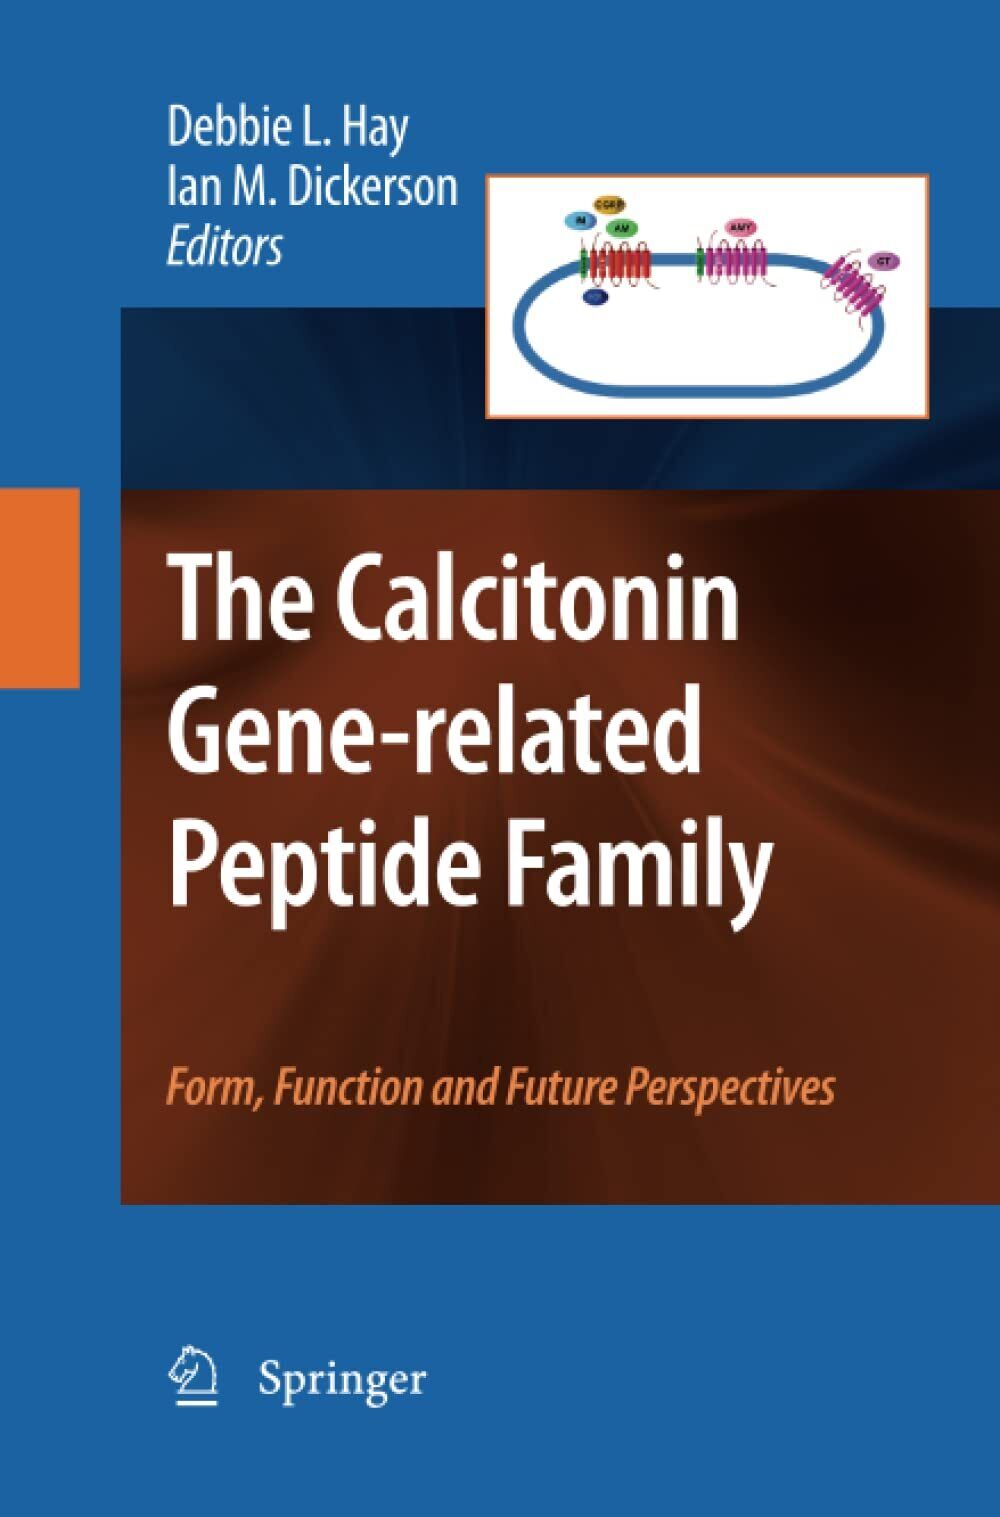 The calcitonin gene-related peptide family - Deborah L. Hay - Springer, 2014